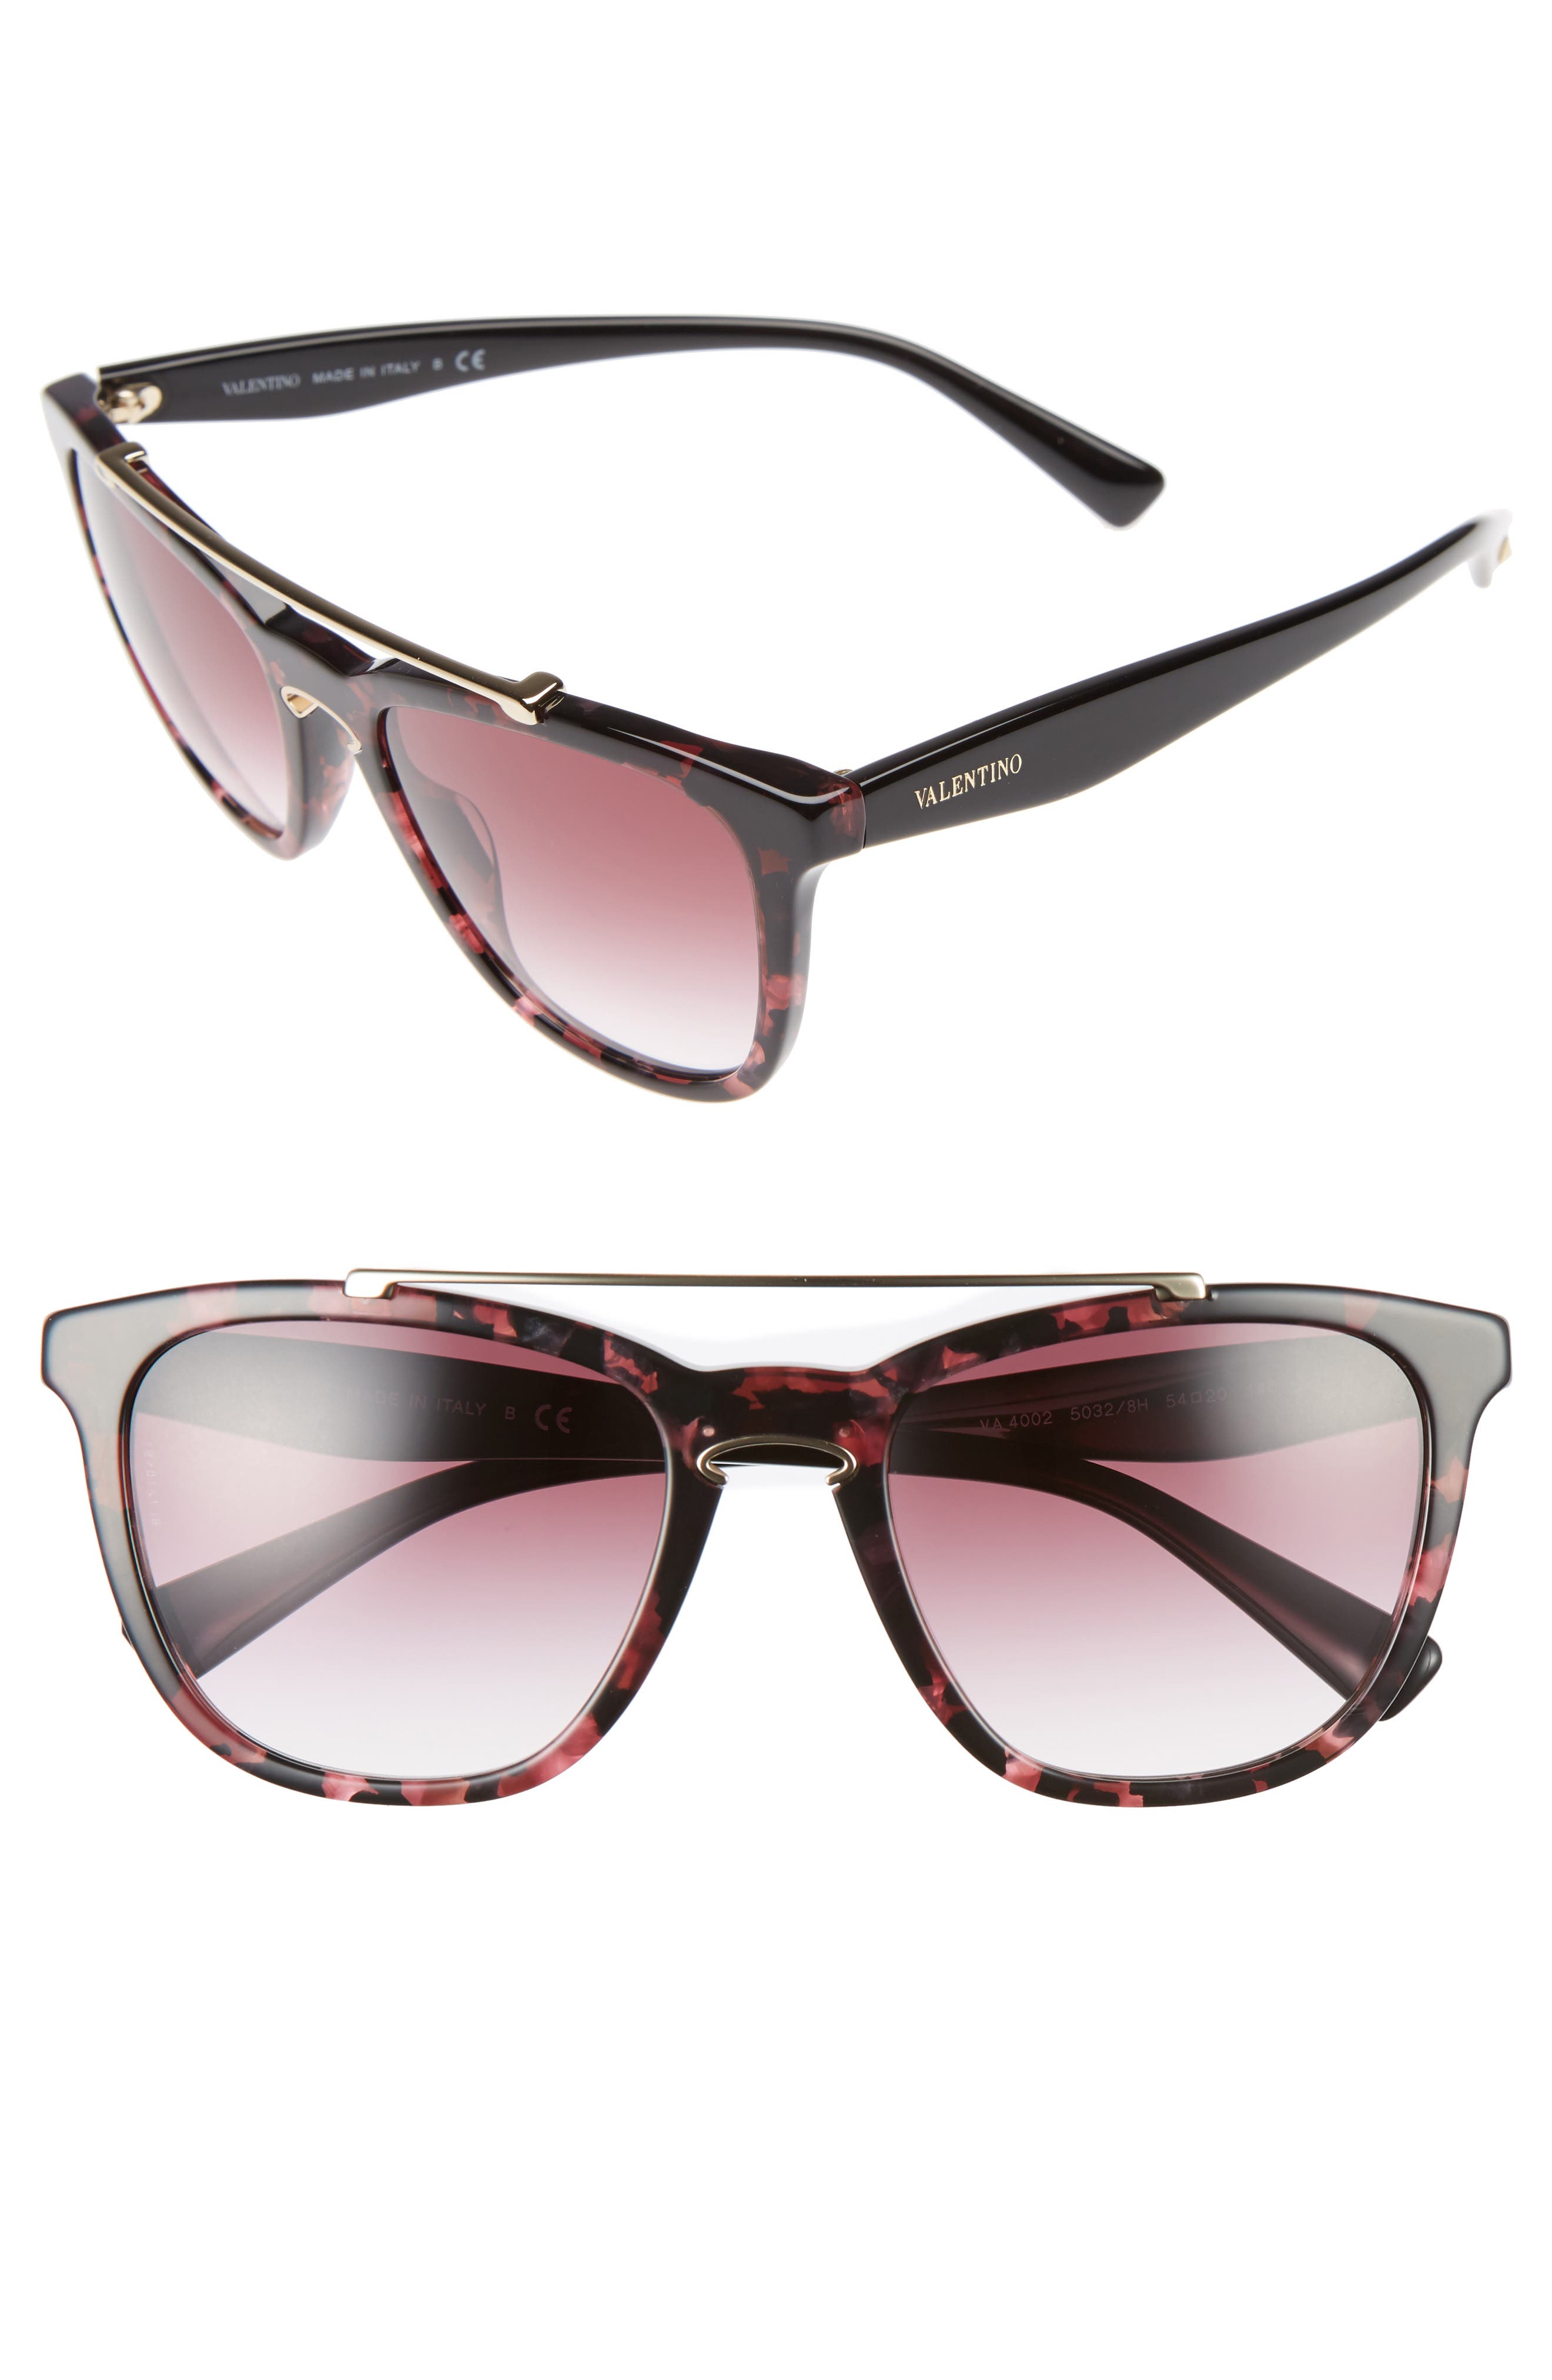 Valentino 54mm Cat Eye Sunglasses in Rose Havana/Light Gold at Nordstrom